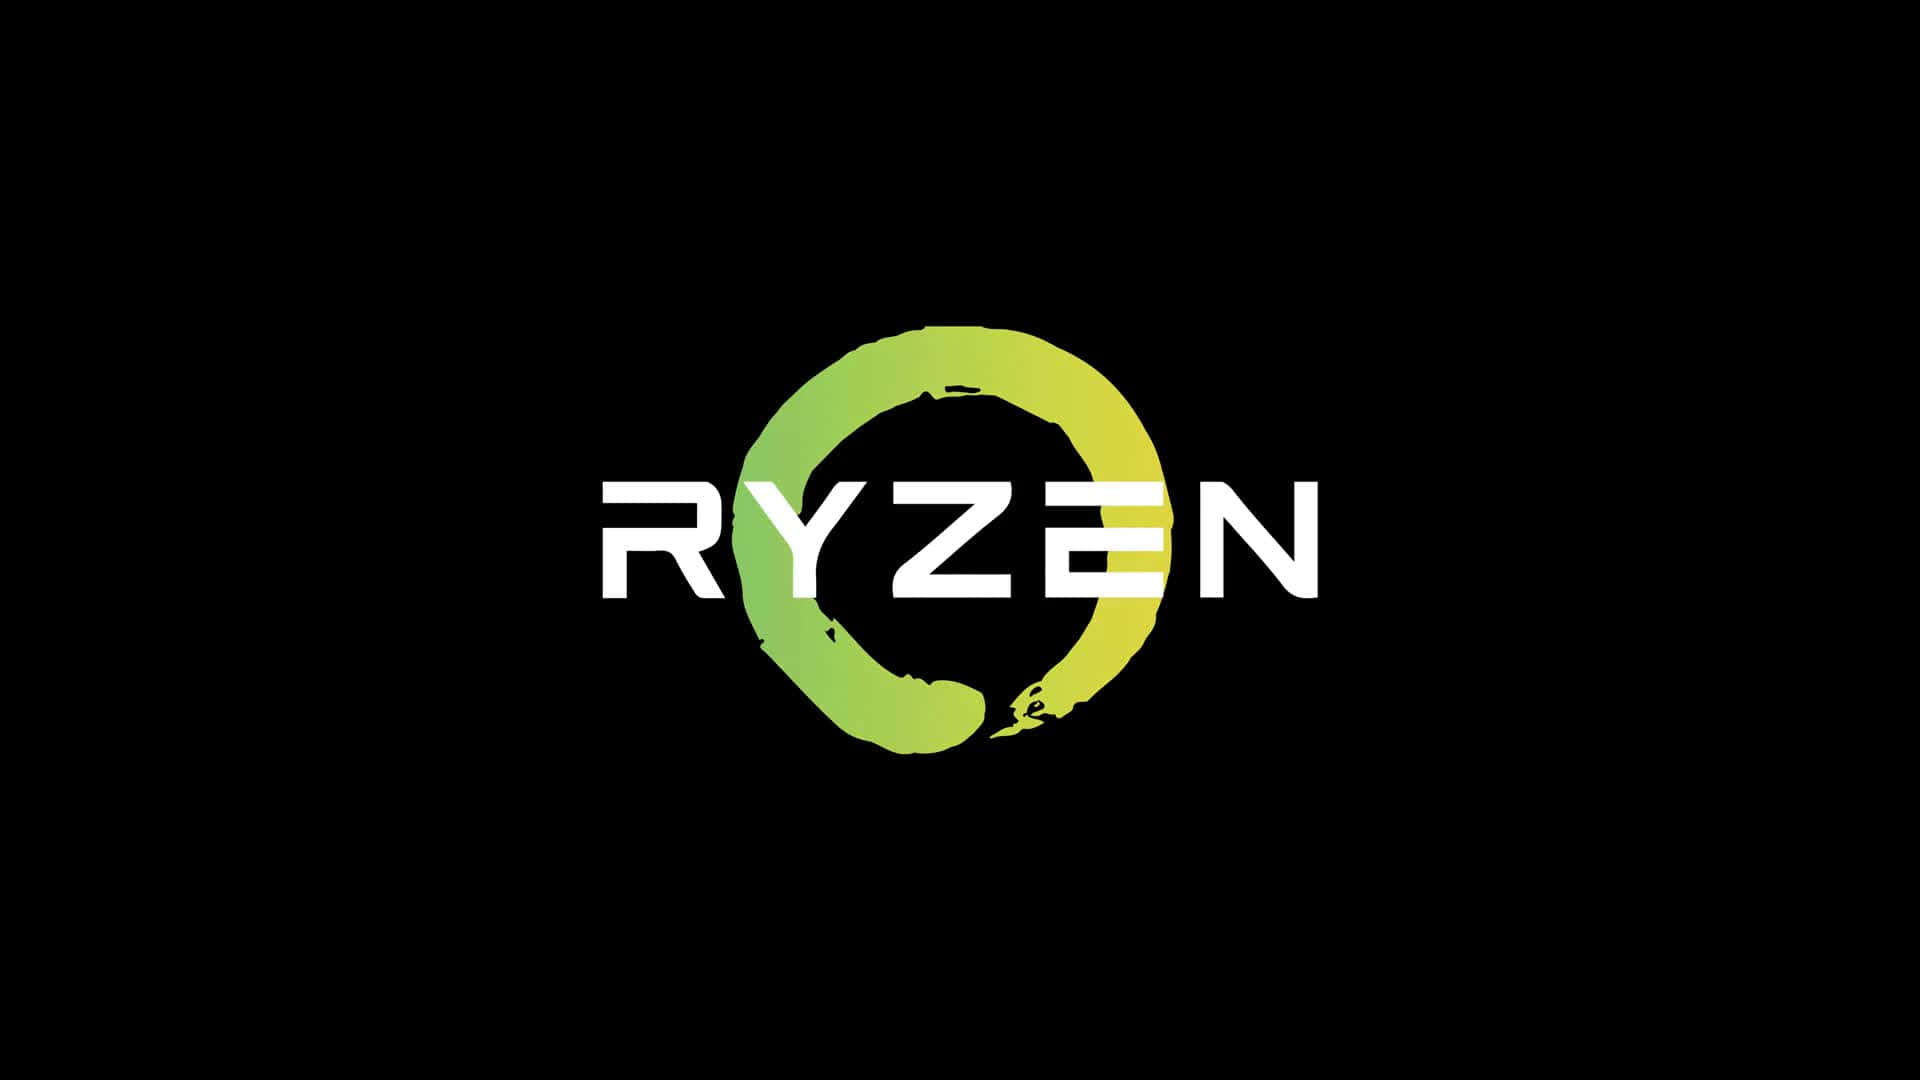 Ryzen Logo Black Background Wallpaper